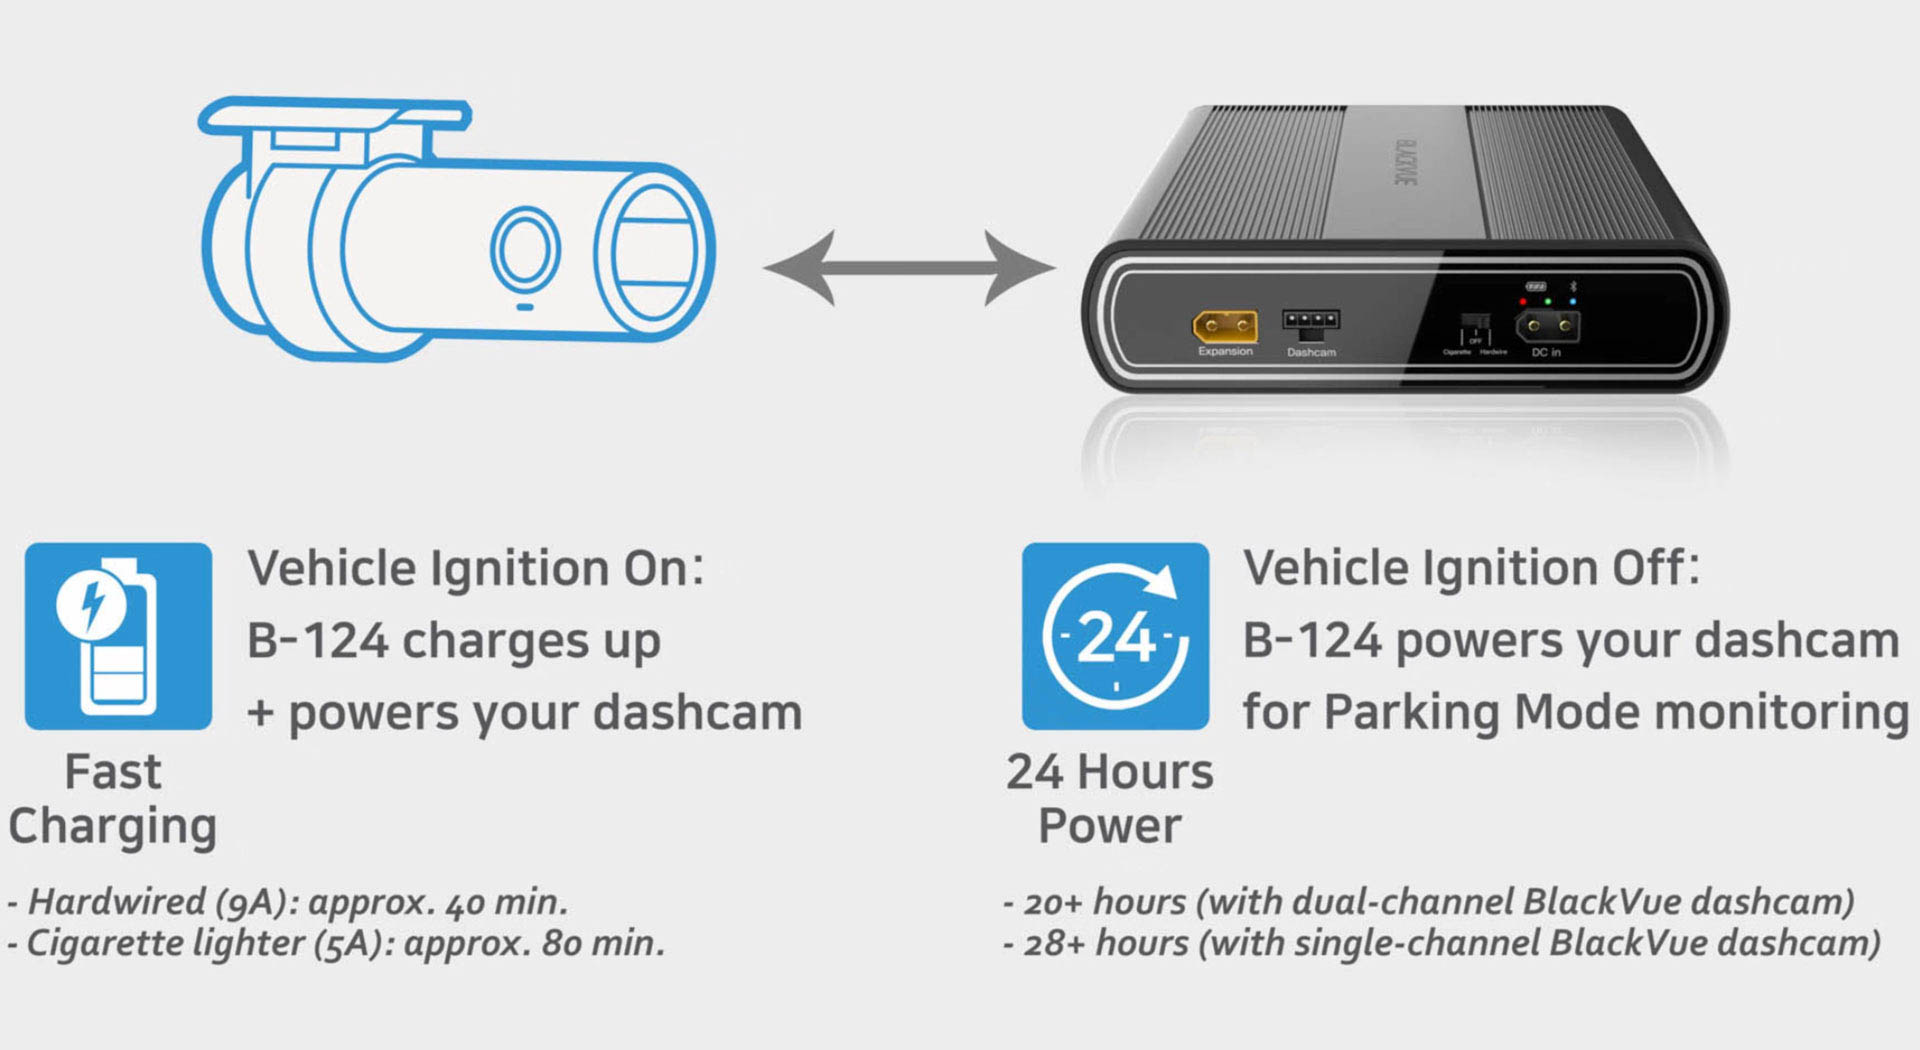 Benefits and Drawbacks of Using Dashcam Parking Mode